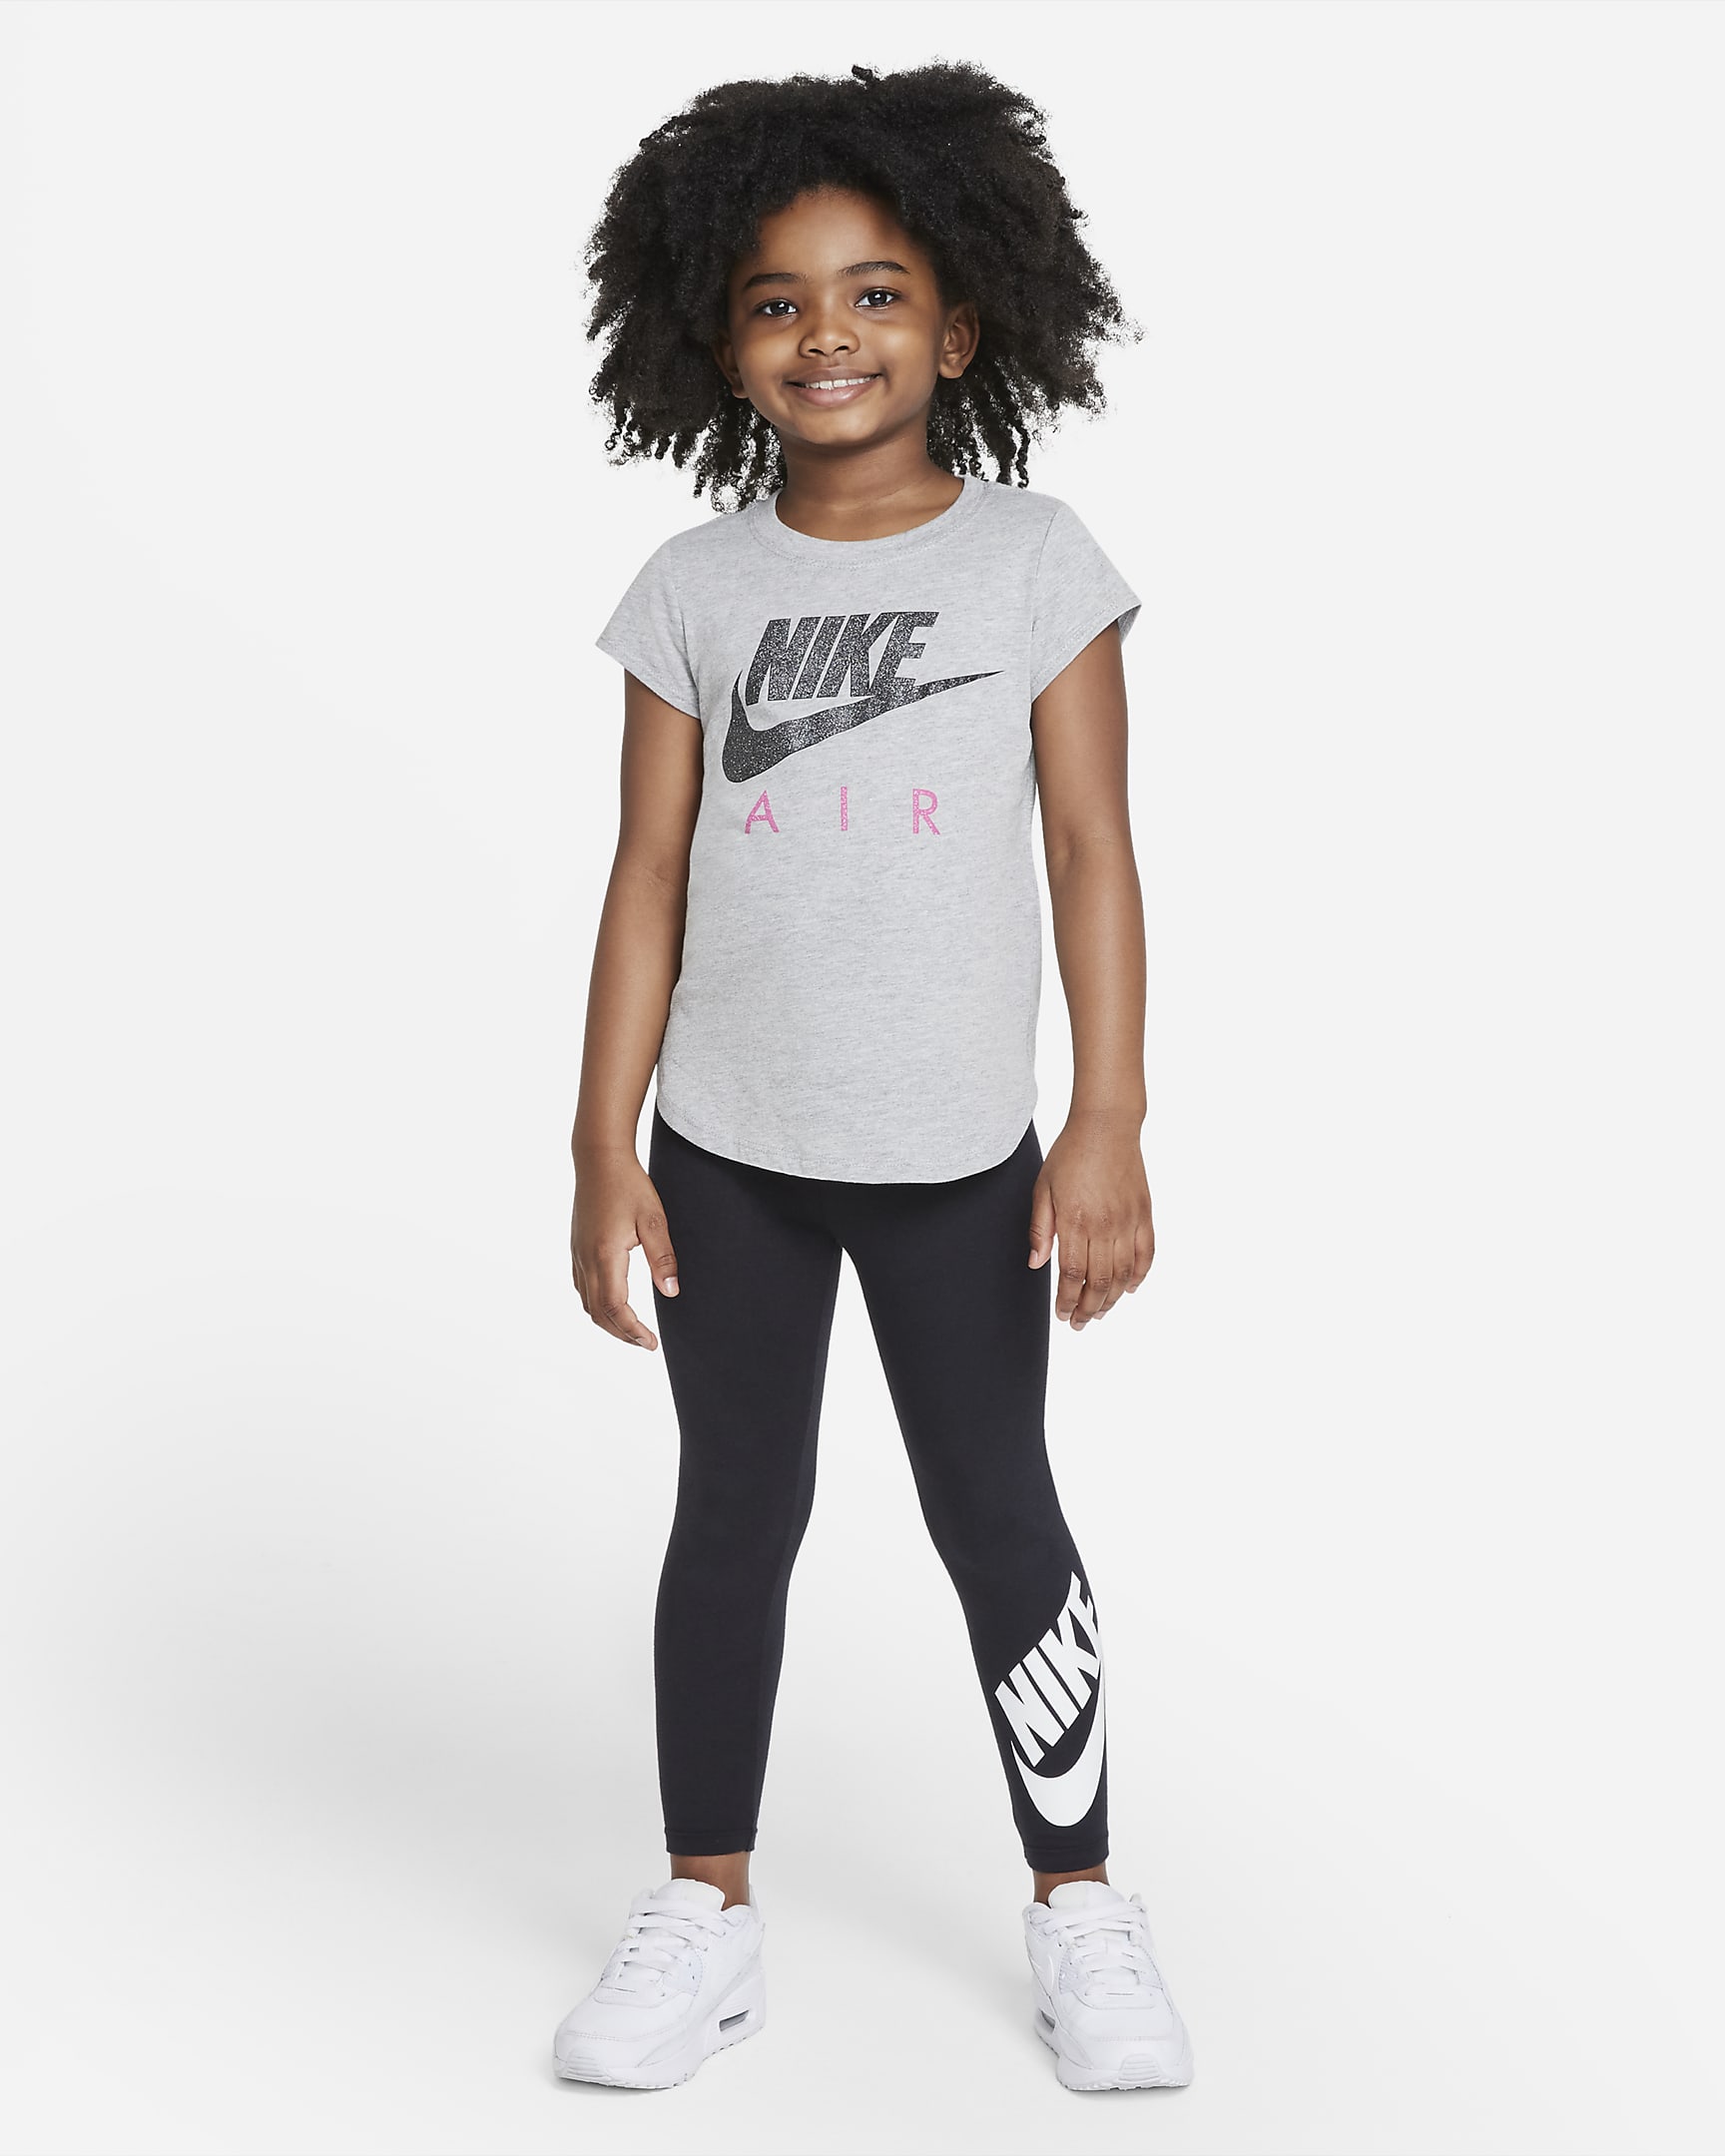 Playera para niños talla pequeña Nike Air. Nike.com